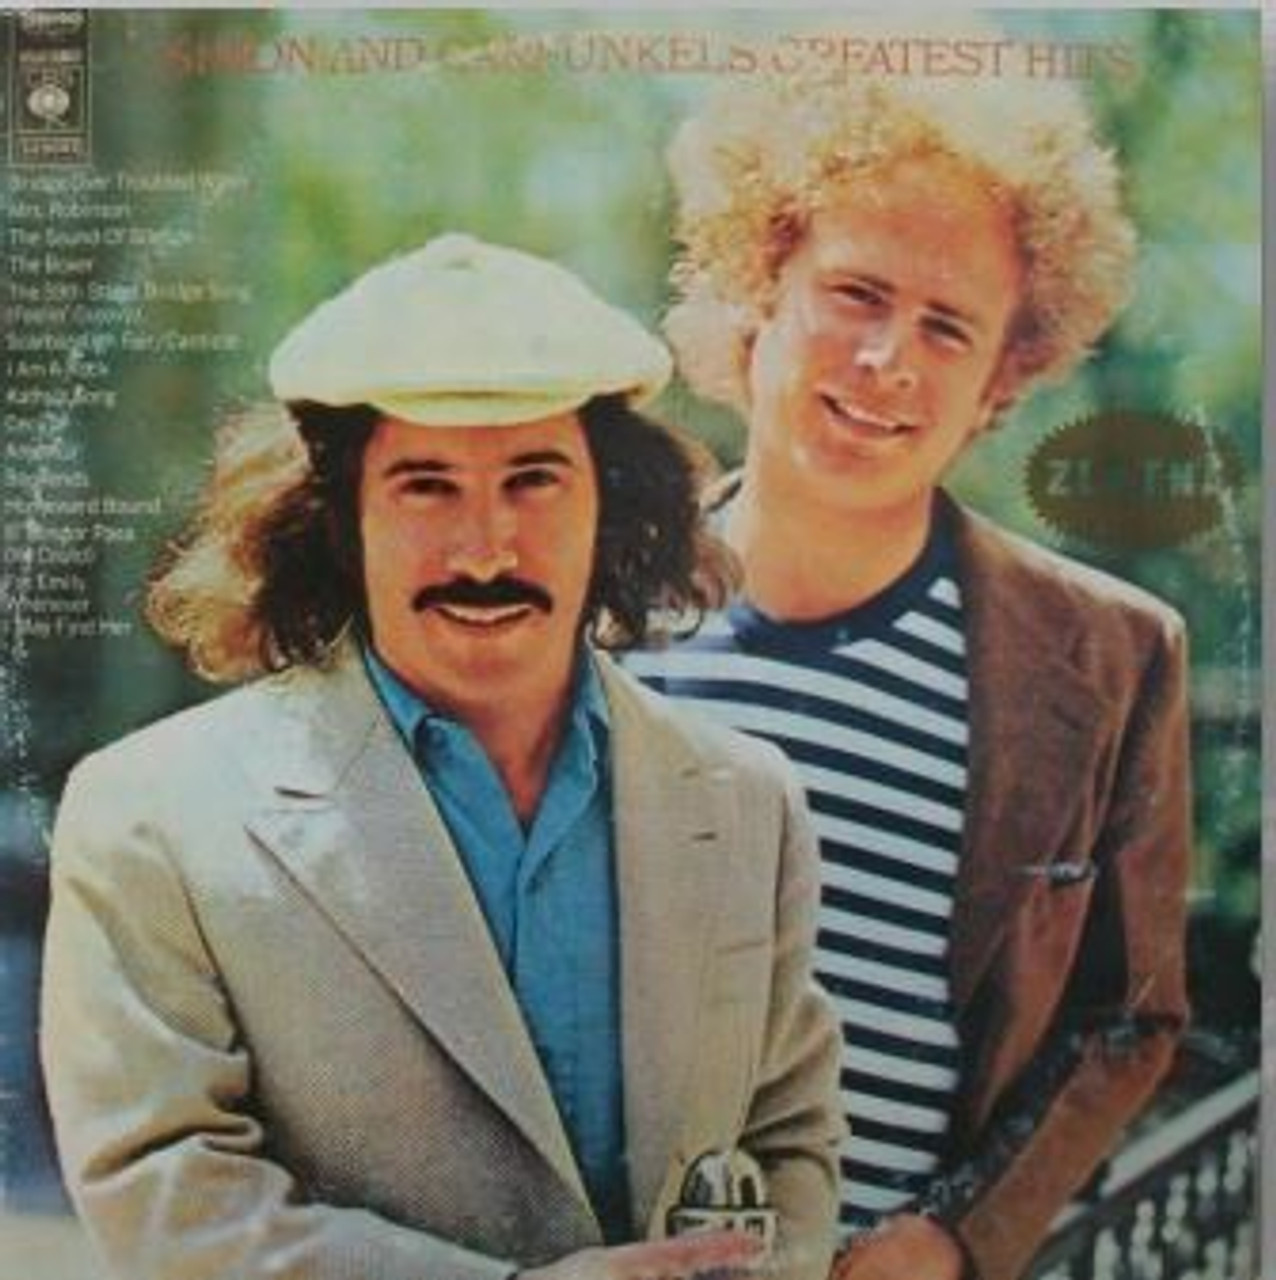 Simon & Garfunkel - Greatest hits